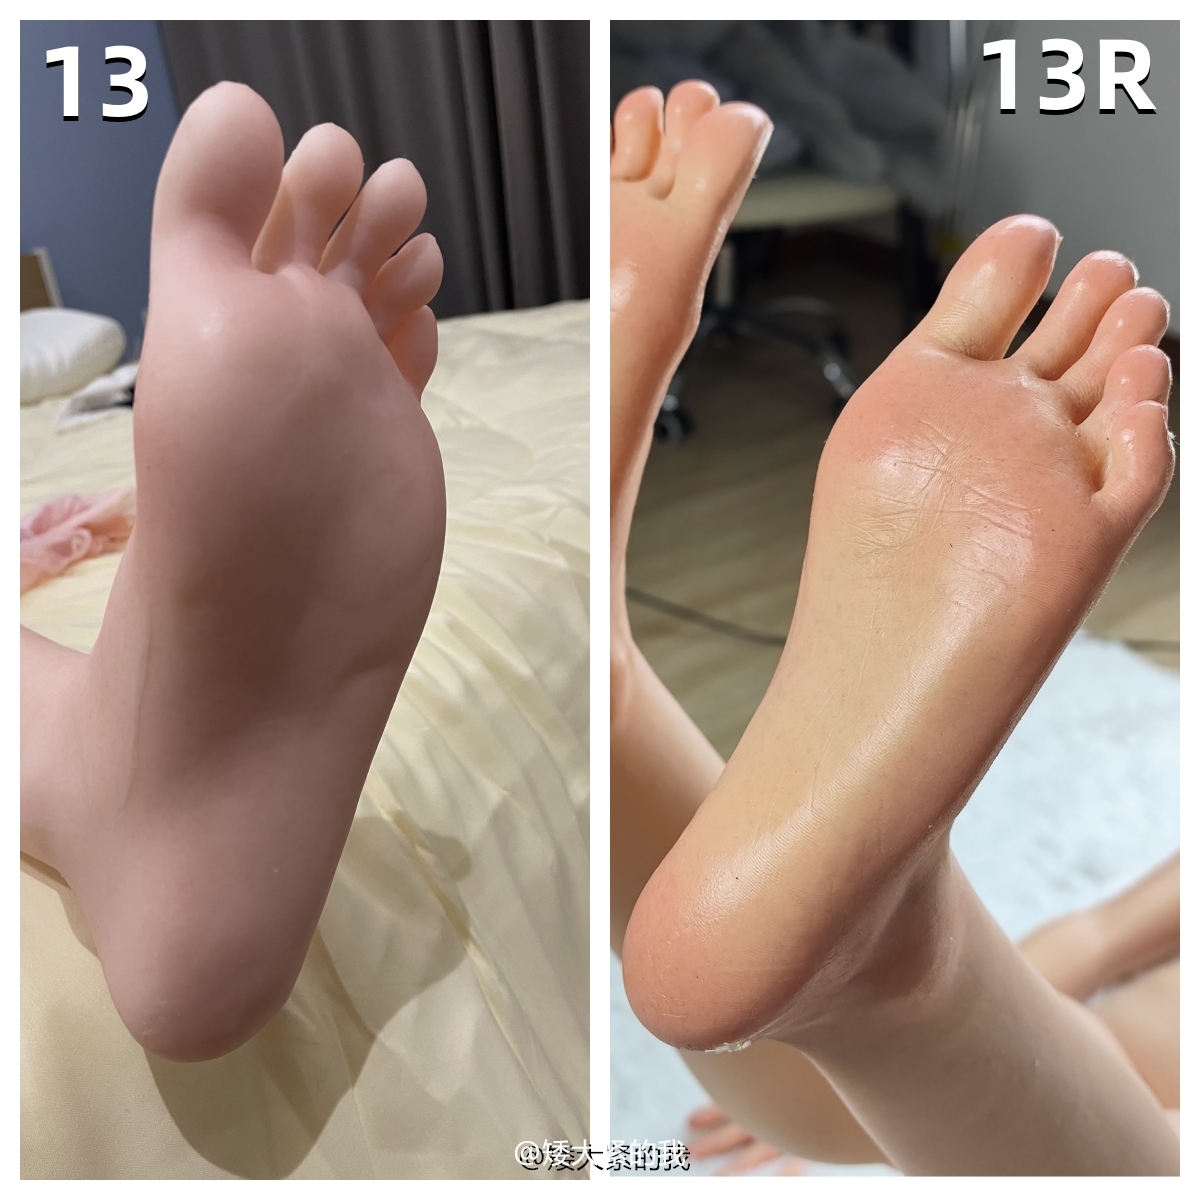 Gynoid Doll RZR|Realistic Silicone Sex Doll|Doll's Feet|Finger|Feet Skin Color|13R|Lori|Lisa|